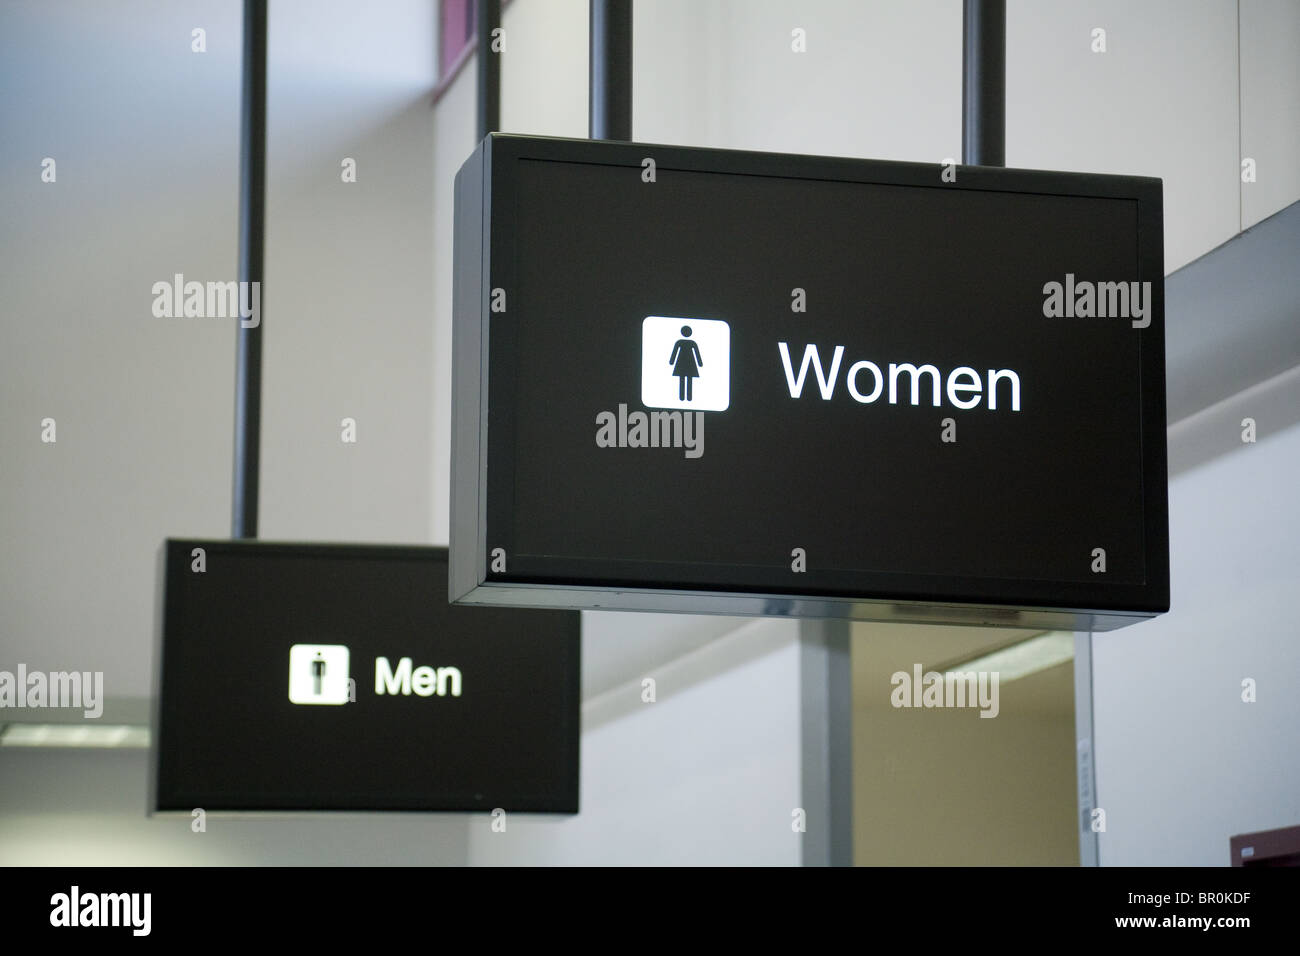 Men and women signs, Las Vegas airport toilets; Nevada USA. Concept Women ahead of men; Women in front of men; Men behind women. Stock Photo